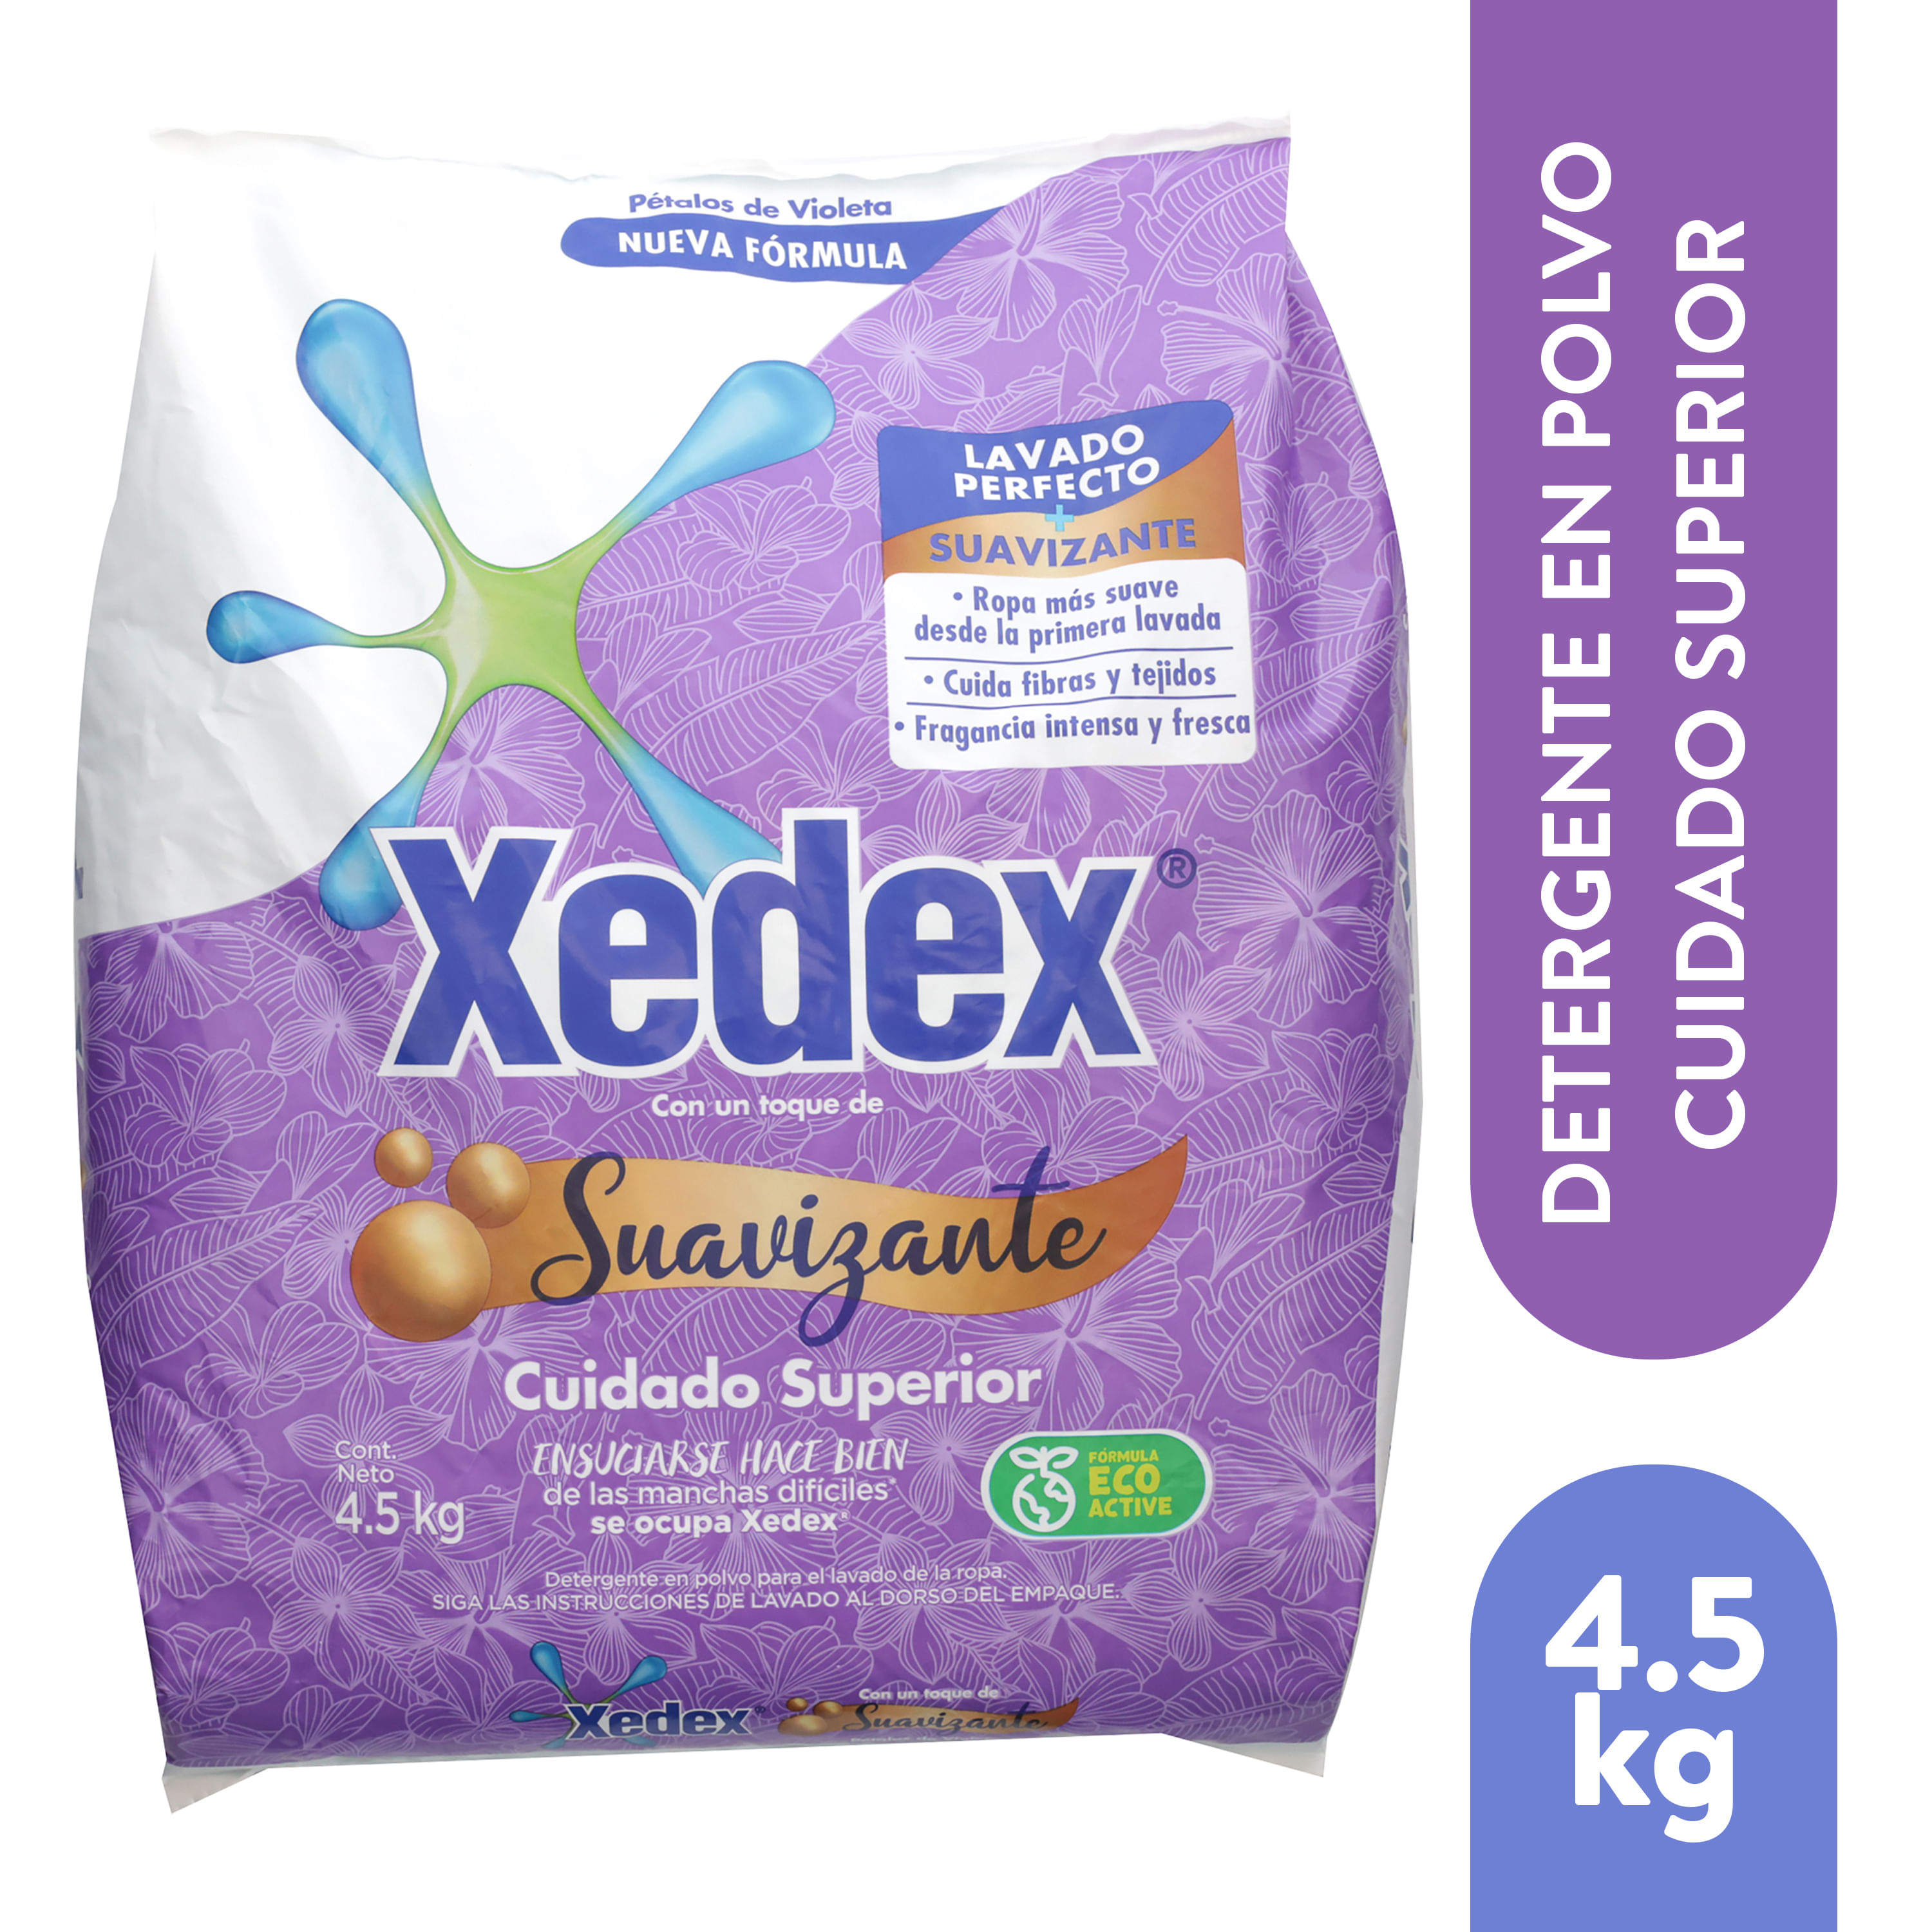 Detergente-Xedex-Suavizante-P-talos-De-Violeta-5000-gr-1-30090